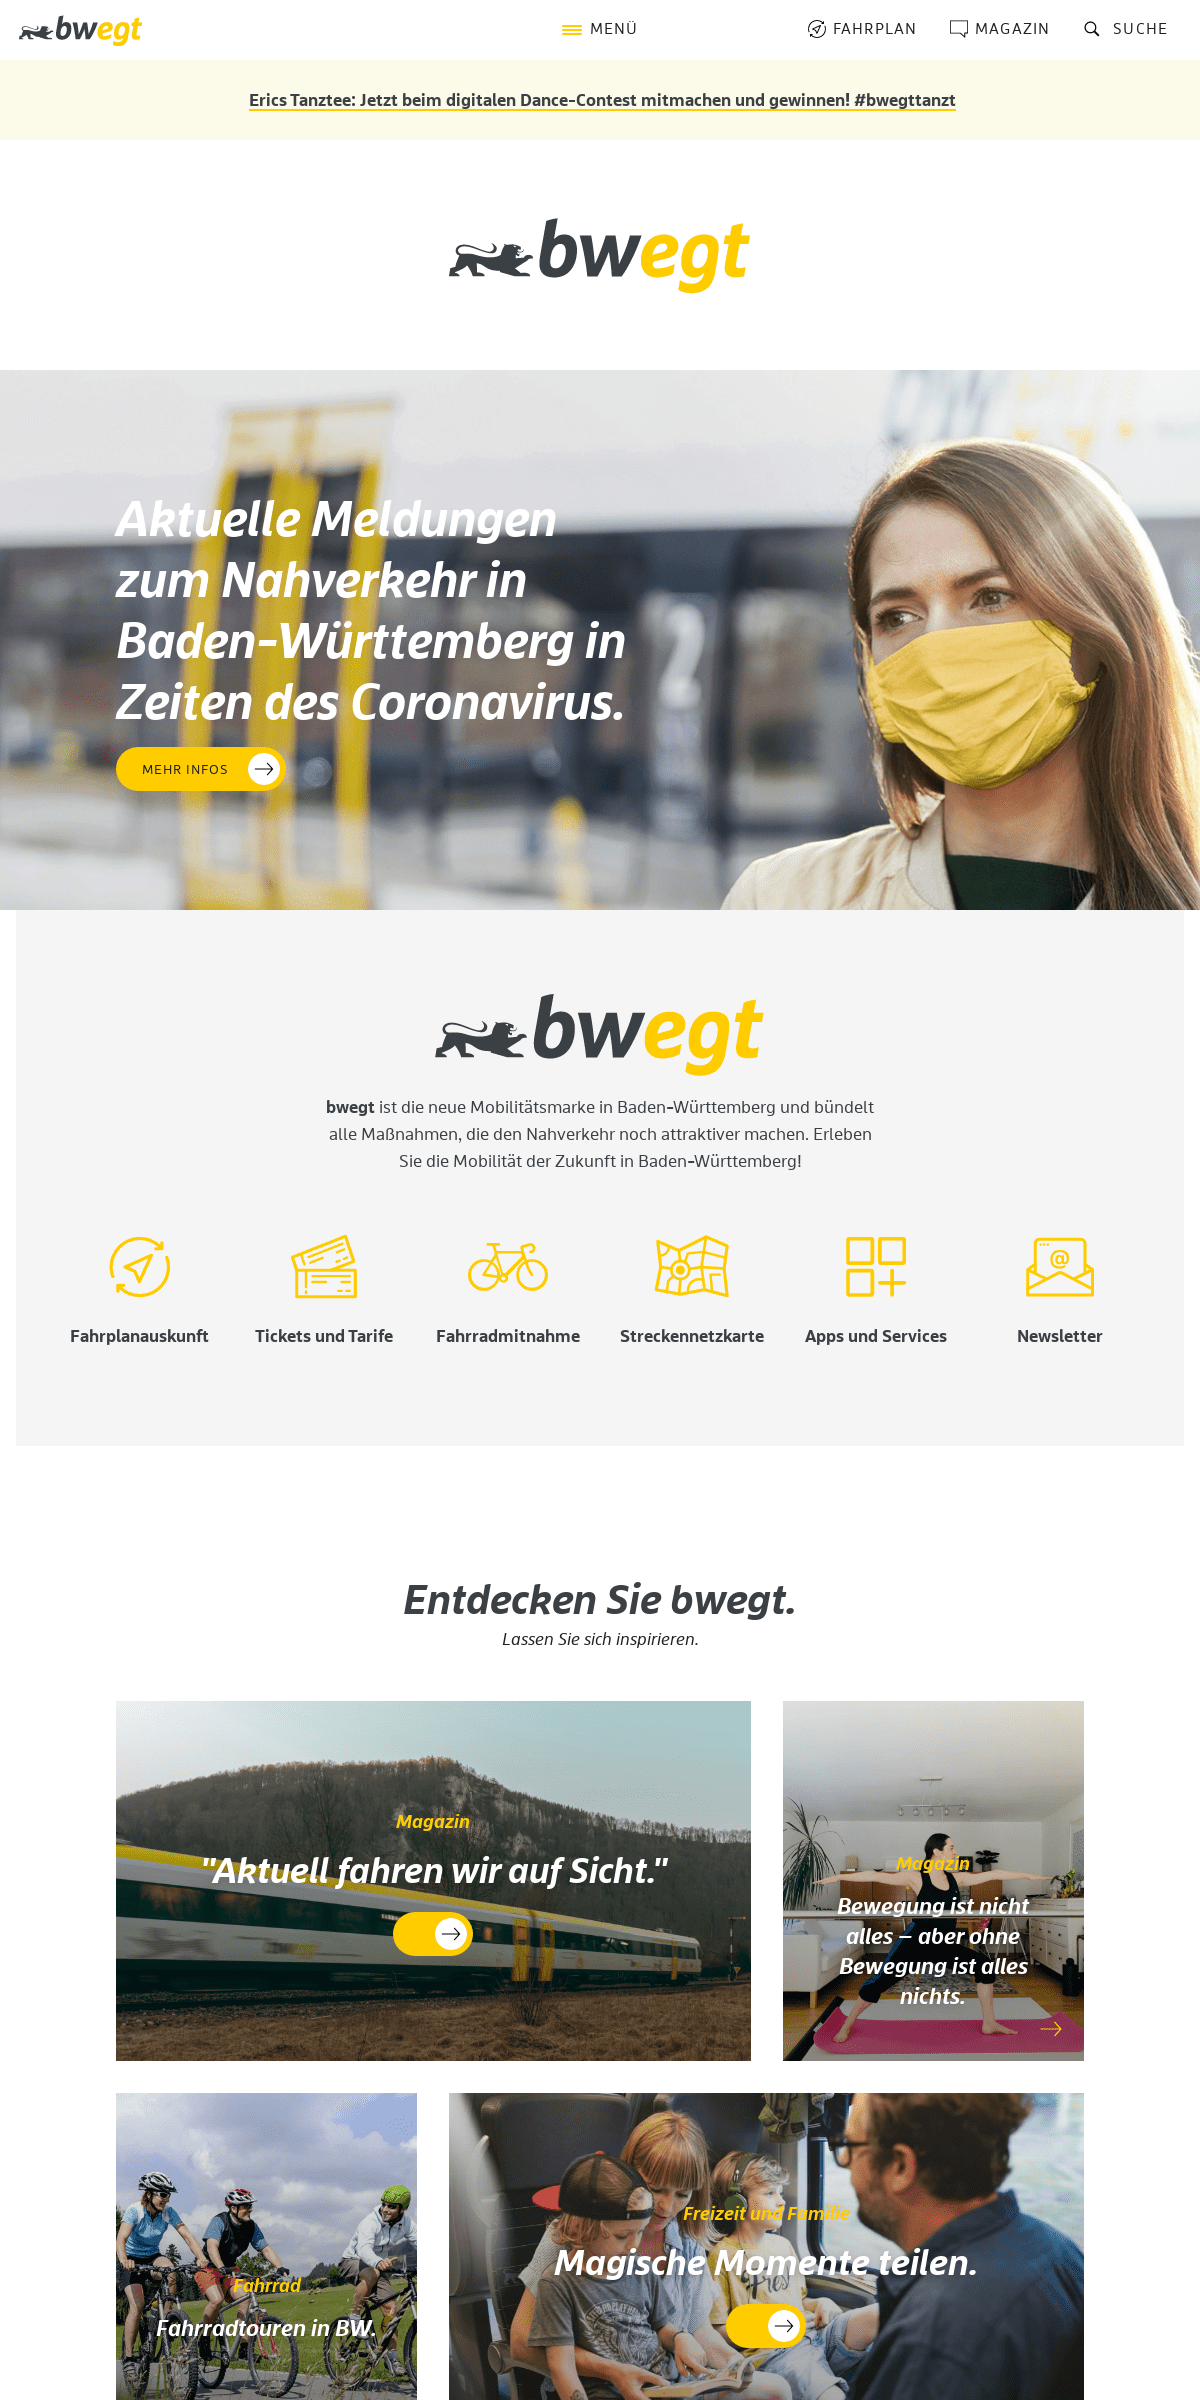 A complete backup of bwegt.de